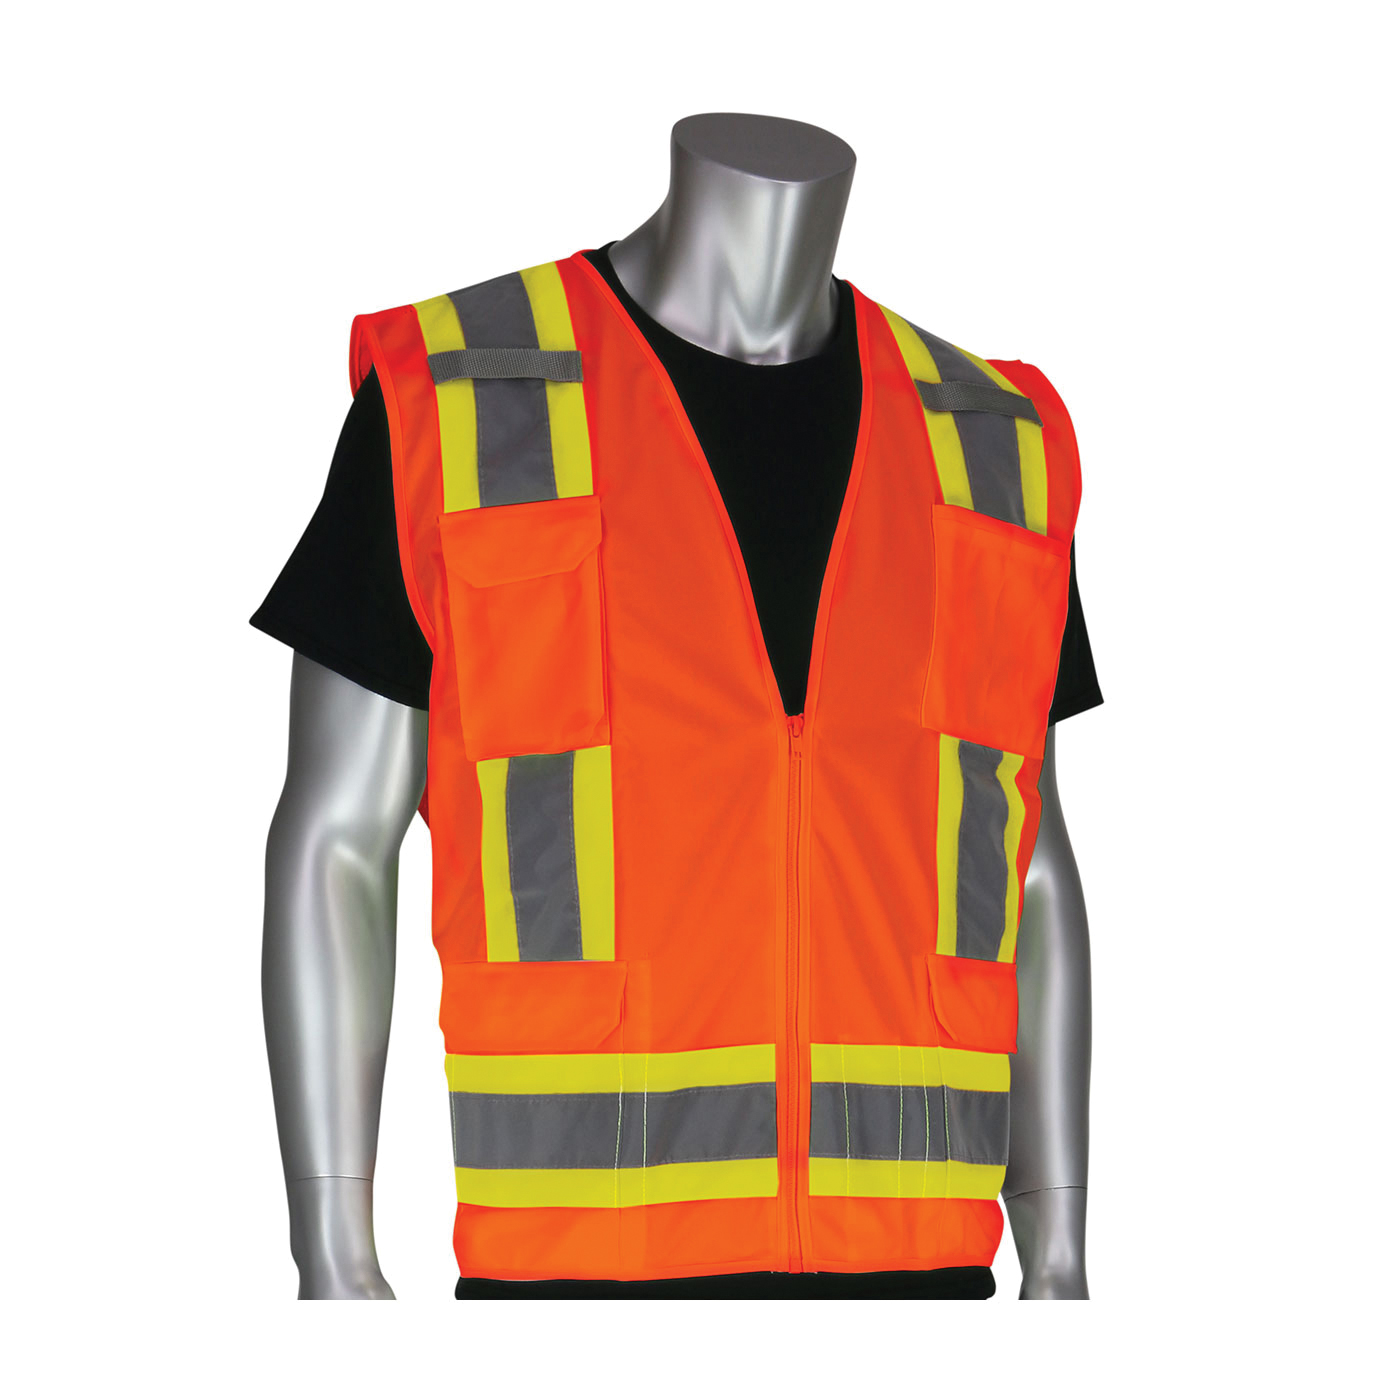 PIP® 302-0500-ORG/6X 2-Tone Surveyor Safety Vest, 6XL, Hi-Viz Orange, Polyester/Solid Tricot, Zipper Closure, 11 Pockets, ANSI Class: Class 2, Specifications Met: ANSI 107 Type R